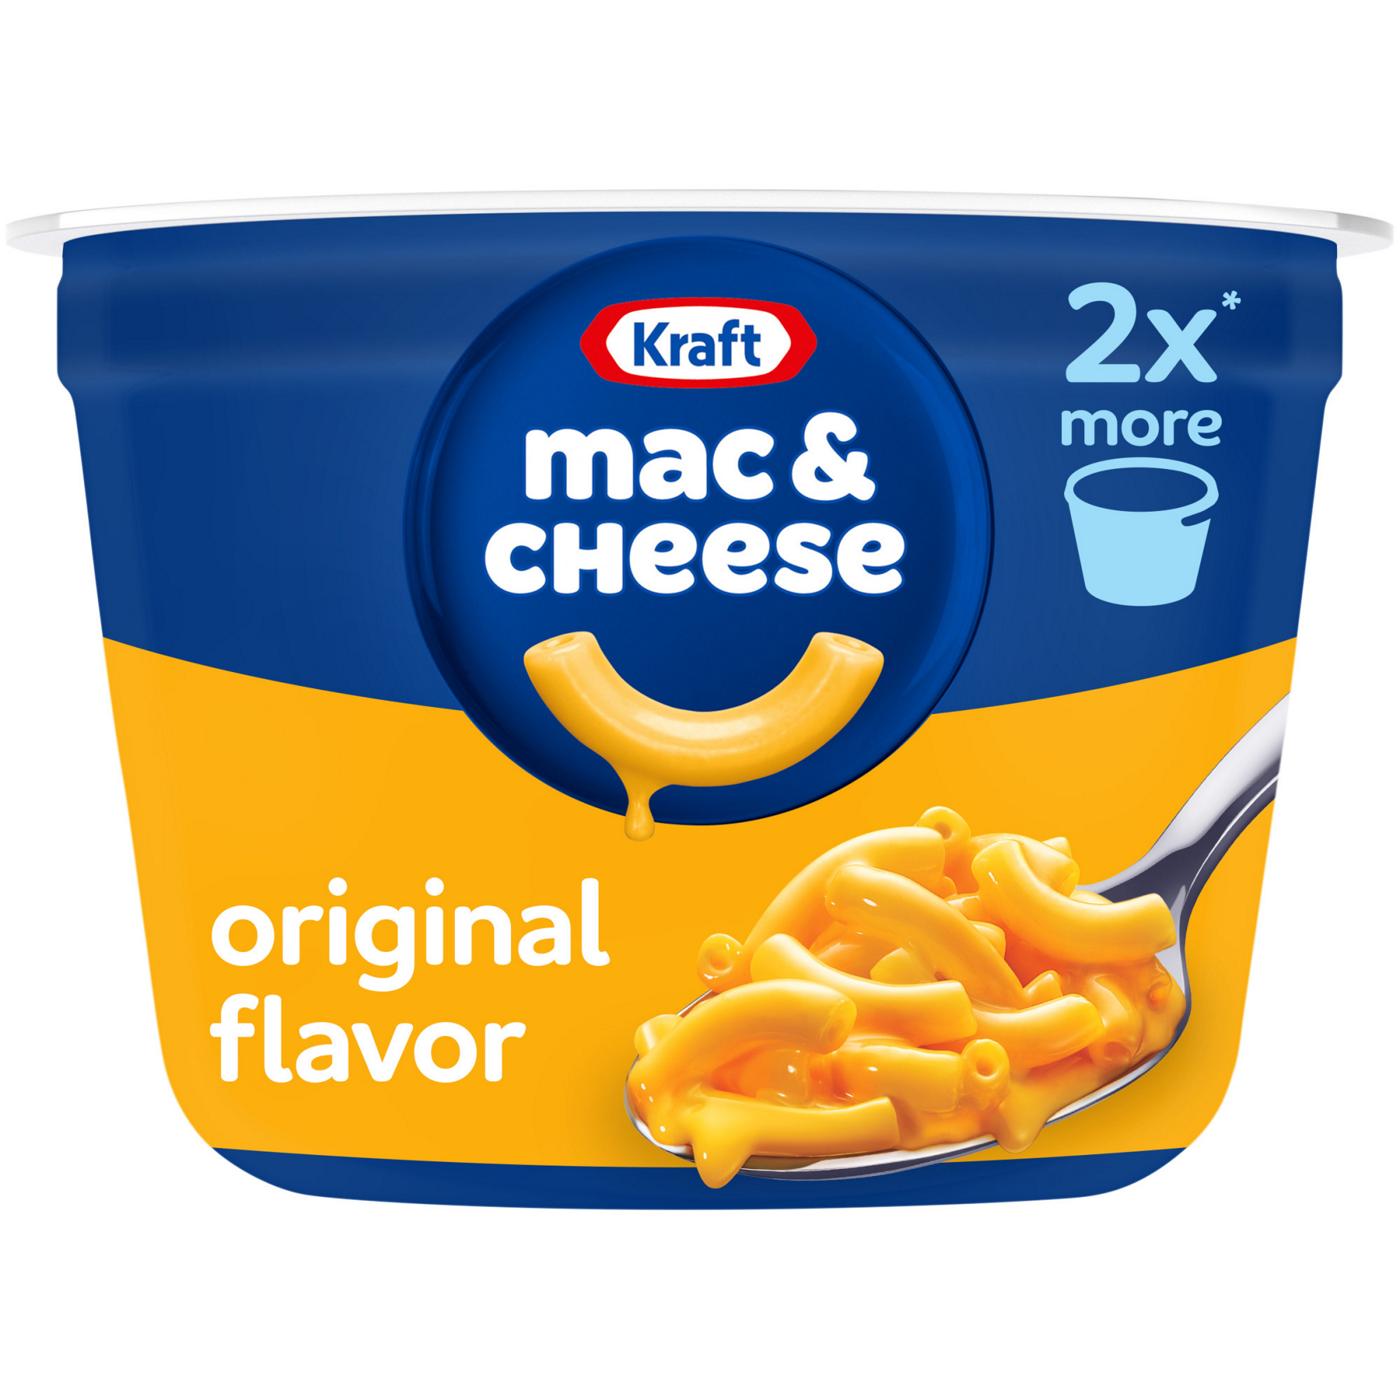  Kraft Original Flavor Macaroni and Cheese Dinner